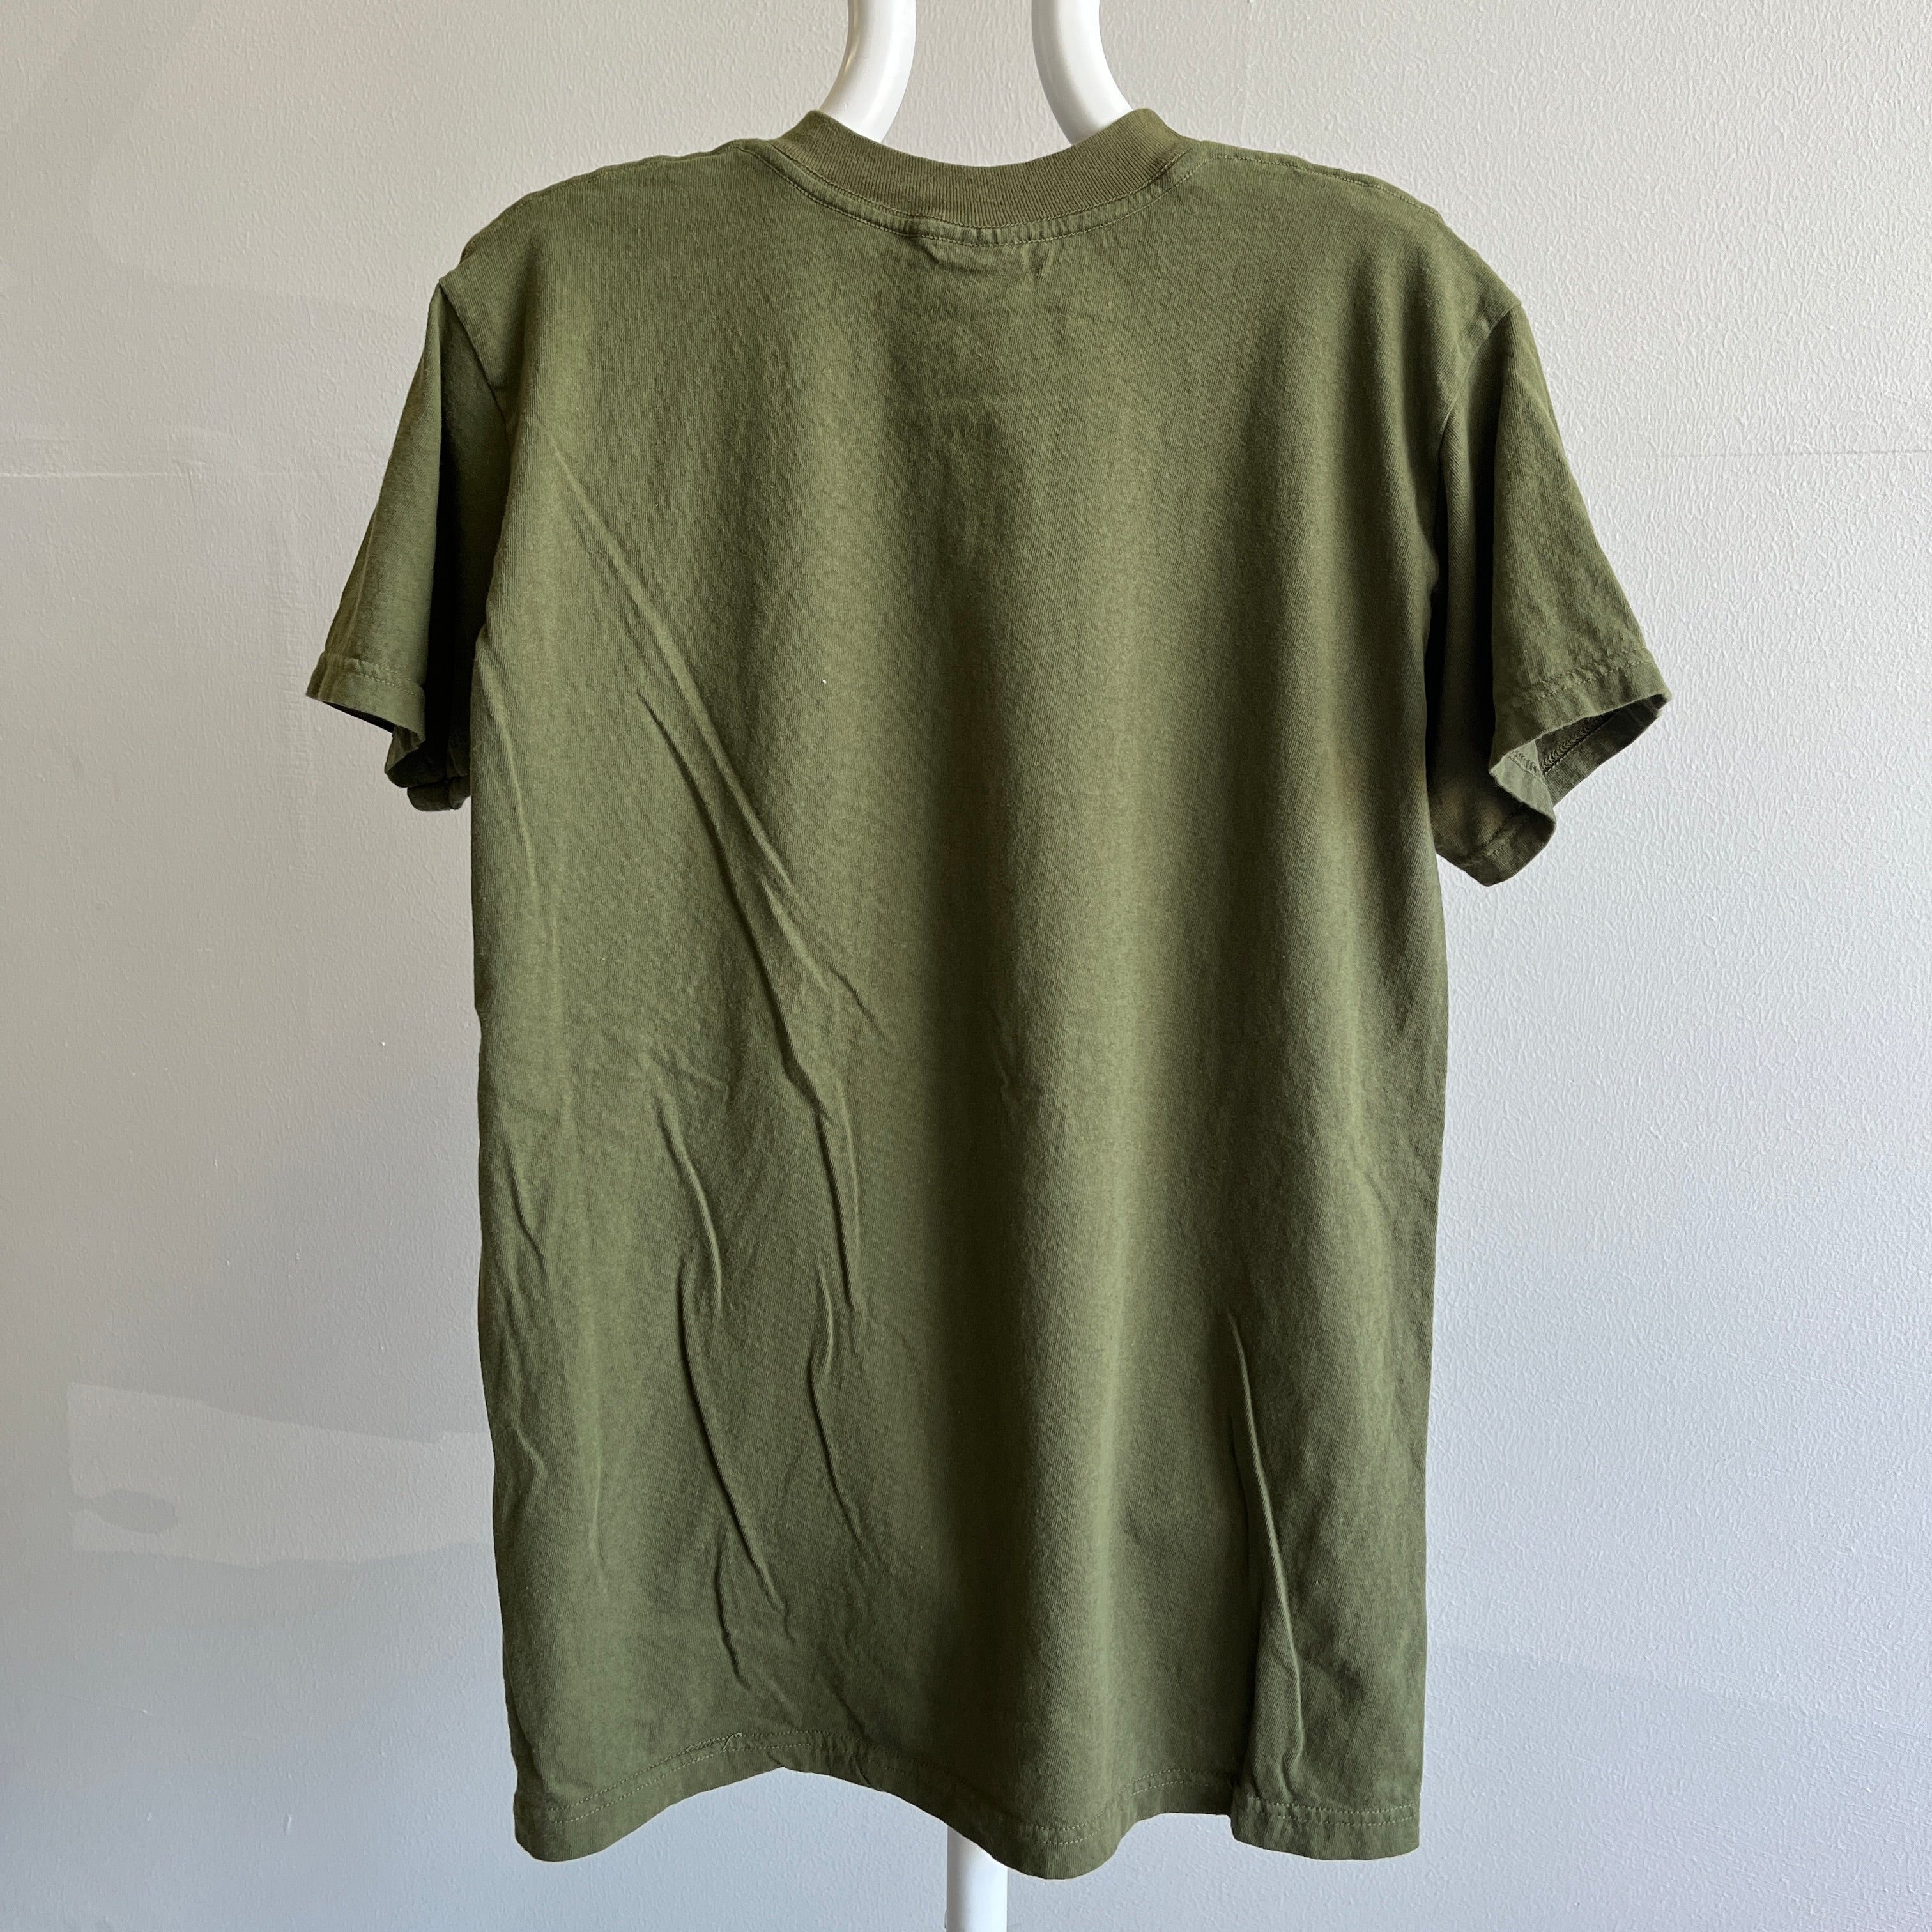 GG - T-shirt vert armée vierge des années 1980